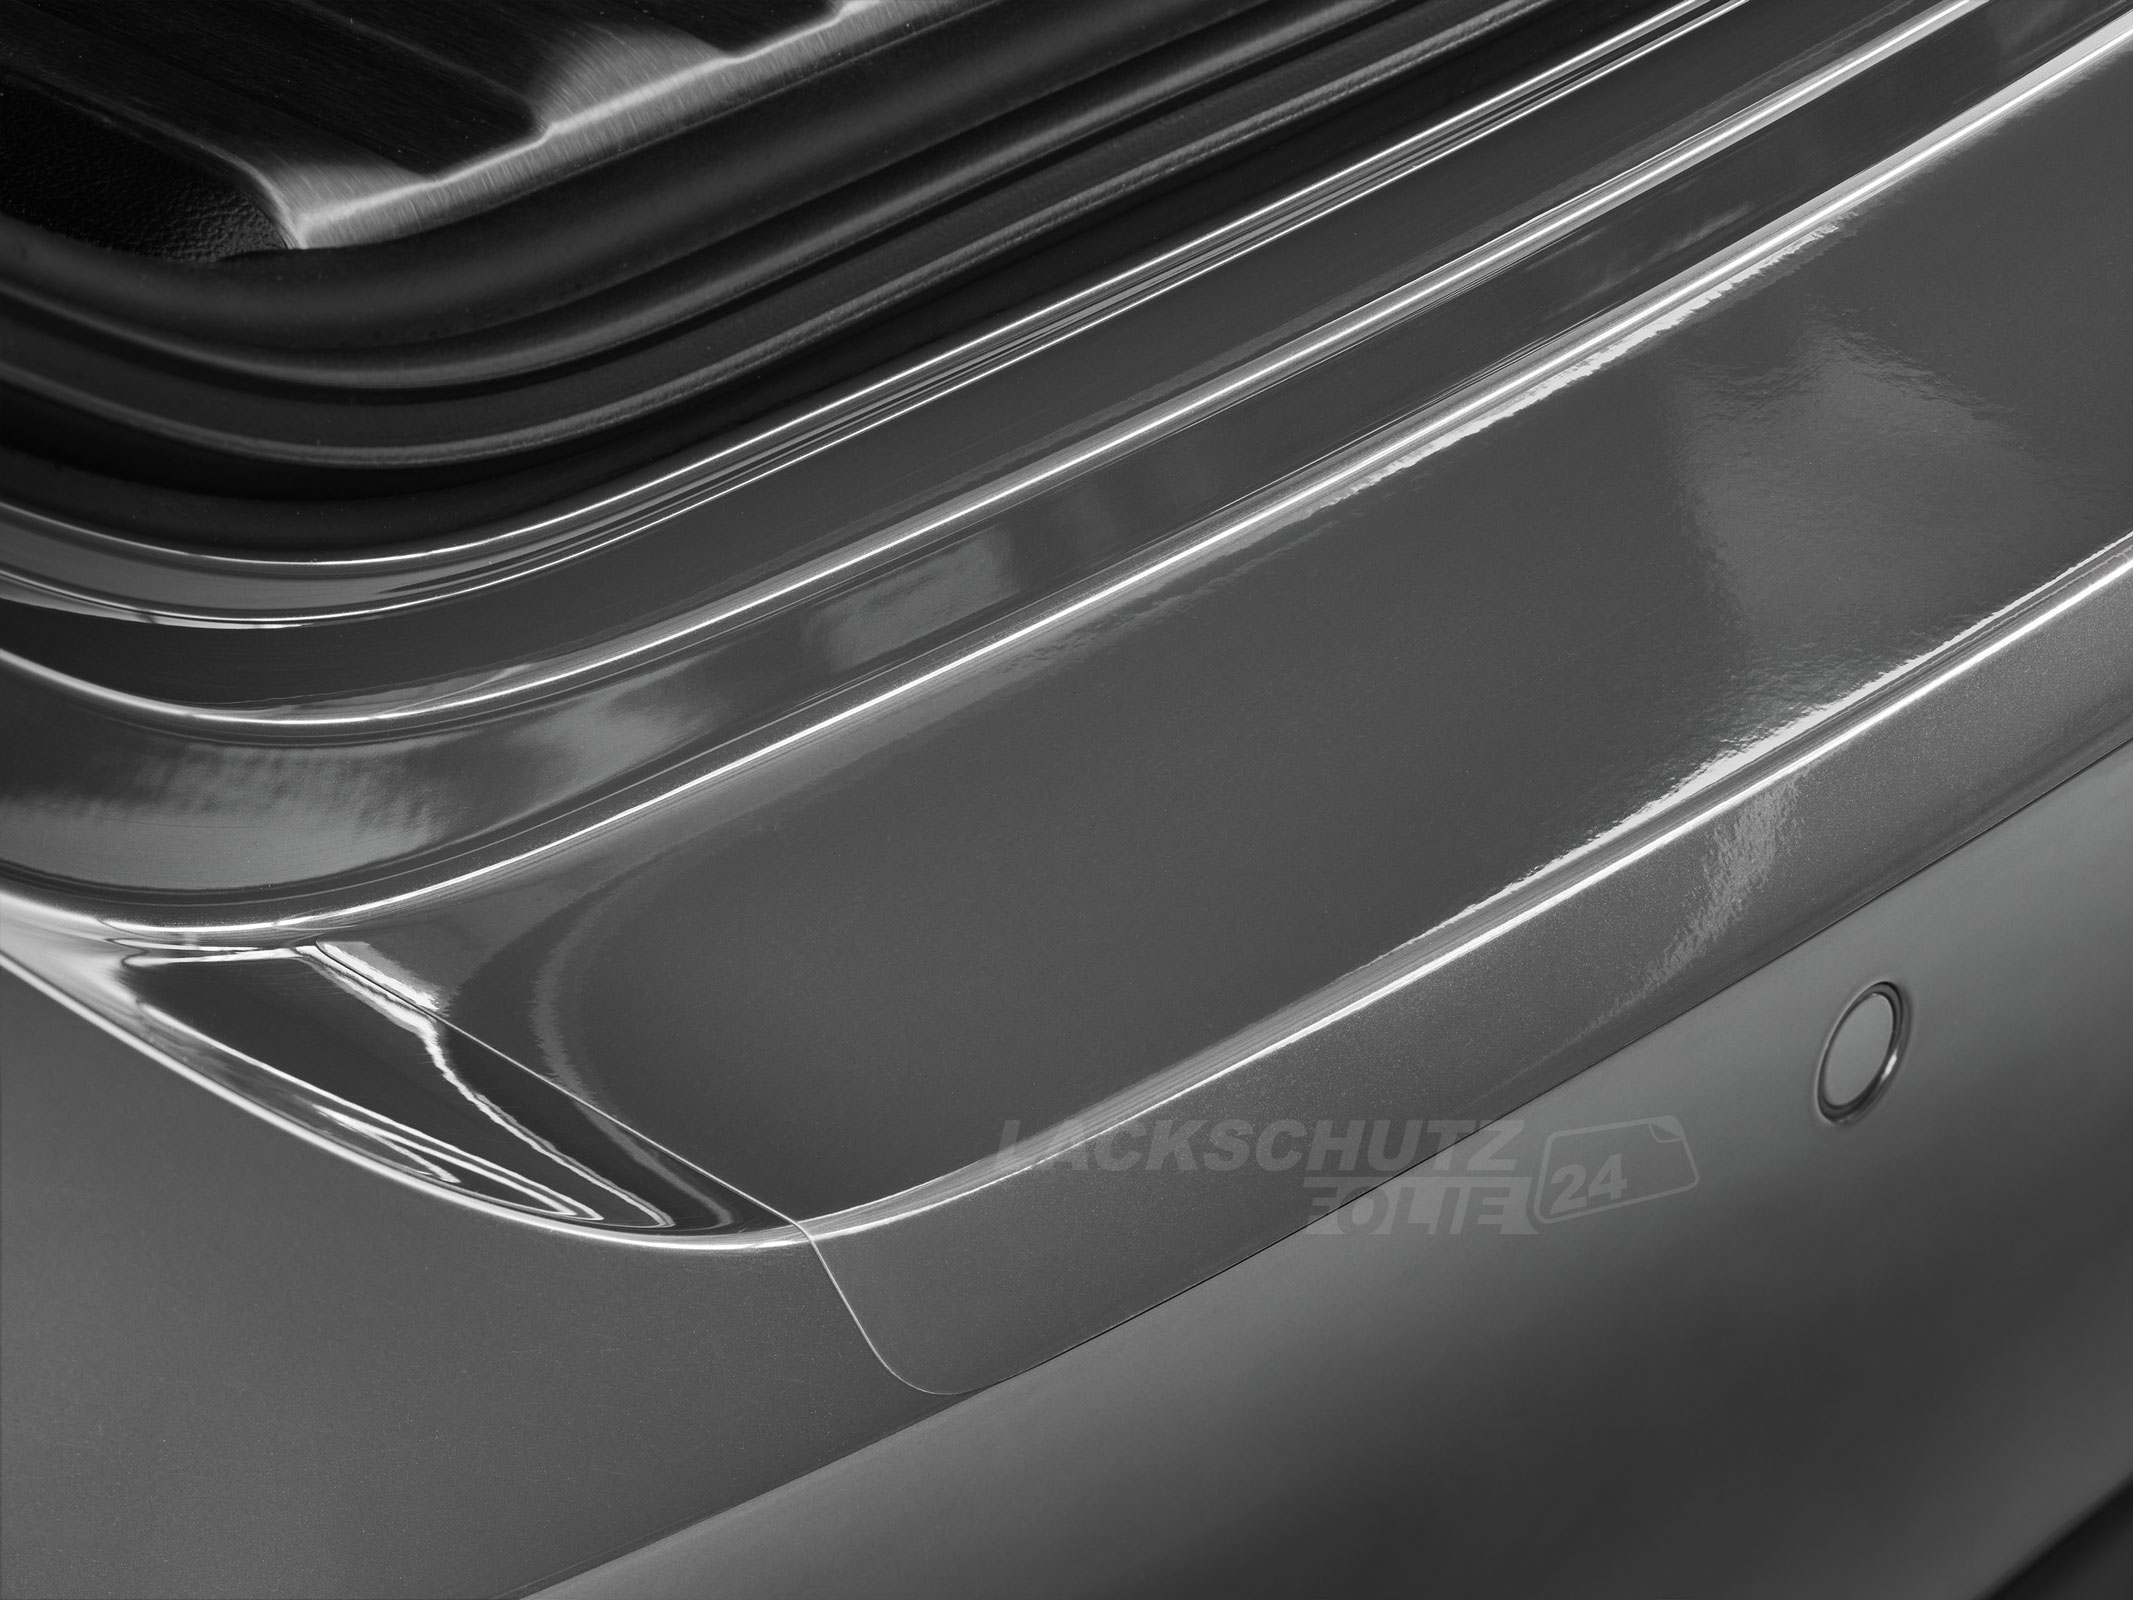 Ladekantenschutzfolie - Transparent Glatt Hochglänzend 150 µm stark für Tesla Model S ab BJ 07/2012 + Facelift-Modelle